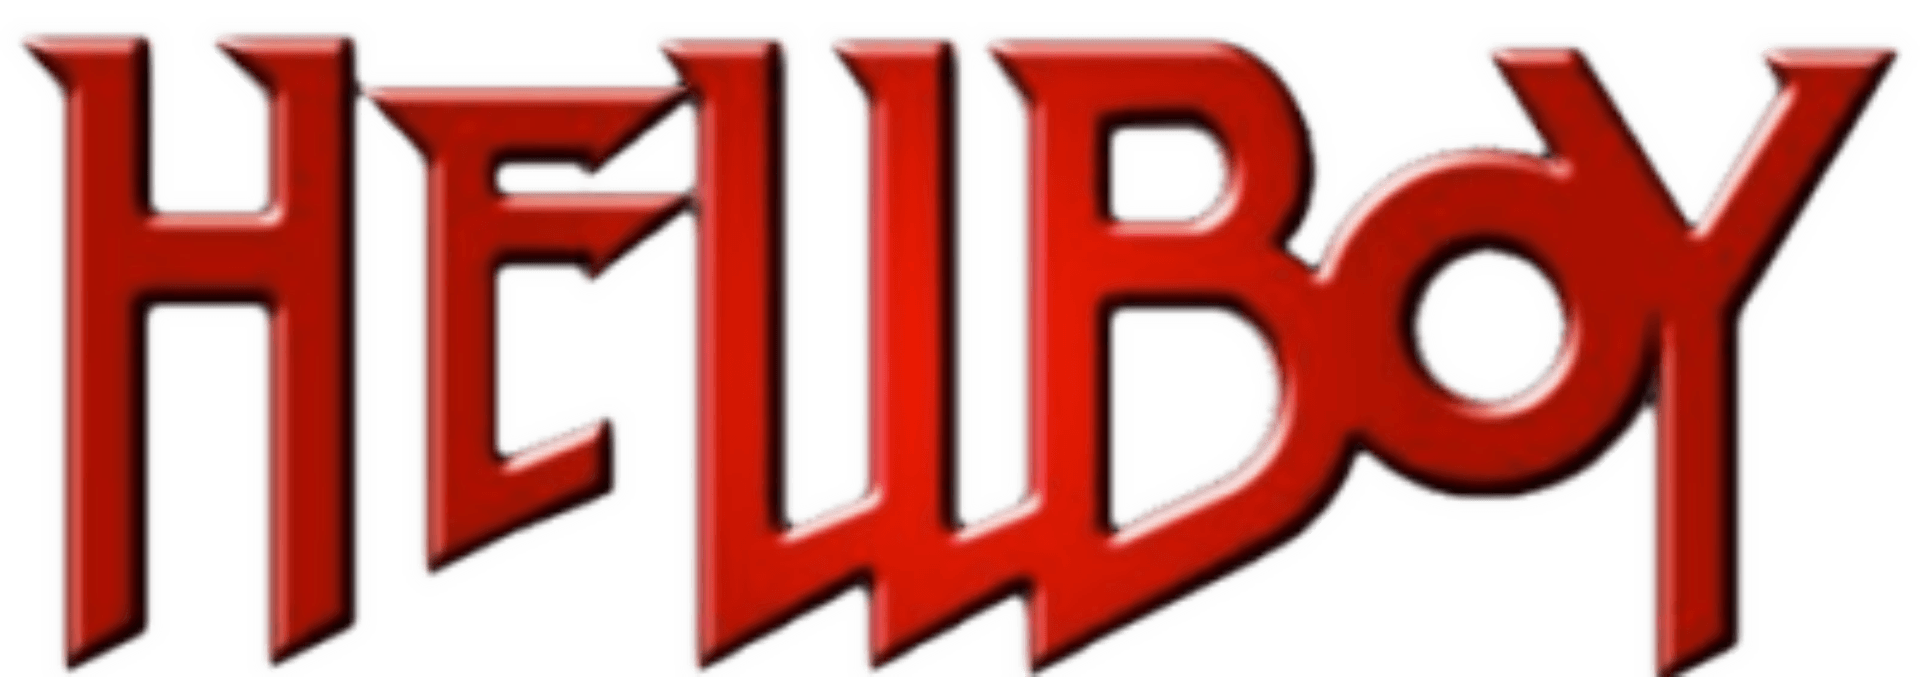 1920 Movie Logo - Plik:Hellboy movie logo.png –, wolna encyklopedia